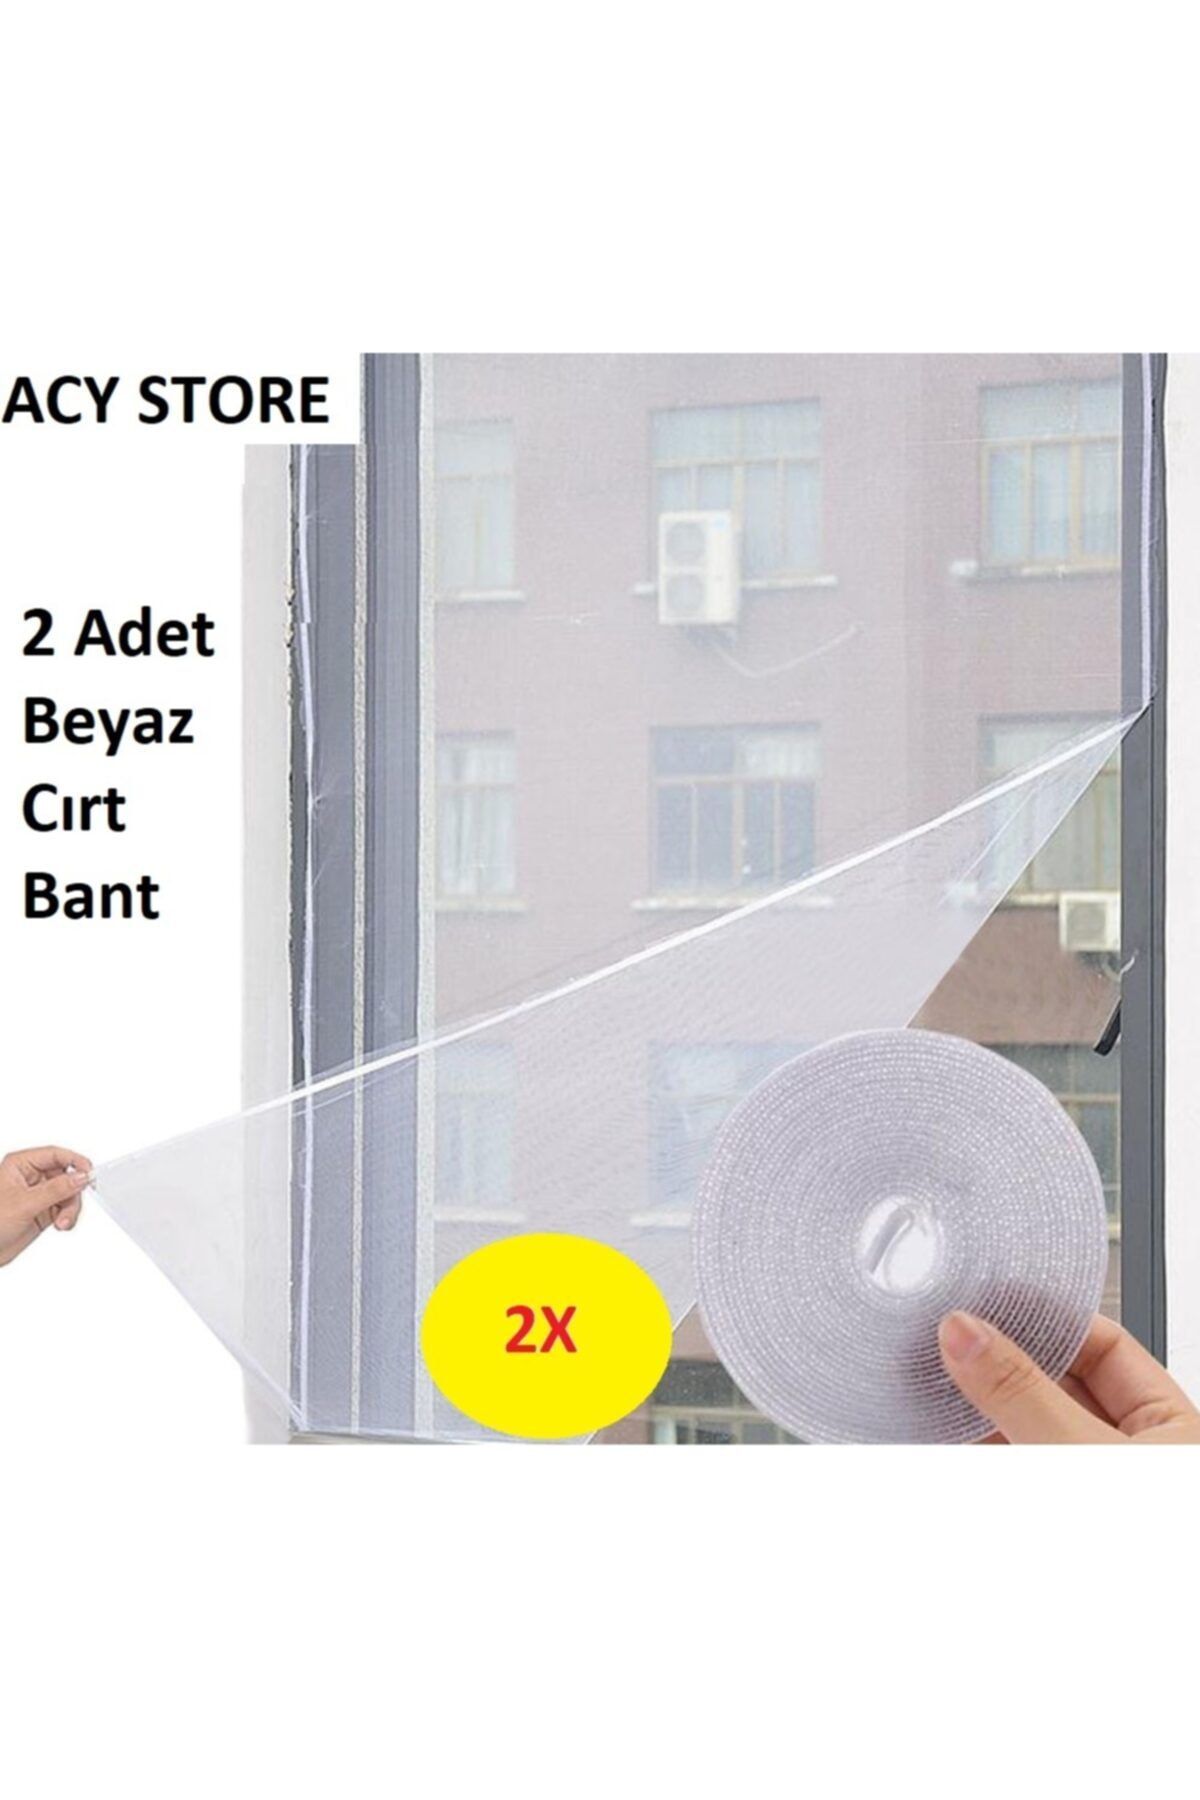 ACY STORE Hazır Pencere Sinekliği 100 X 150 Cm + 2 Adet 4 Metre Cırt Bant Kesilebilir Tül